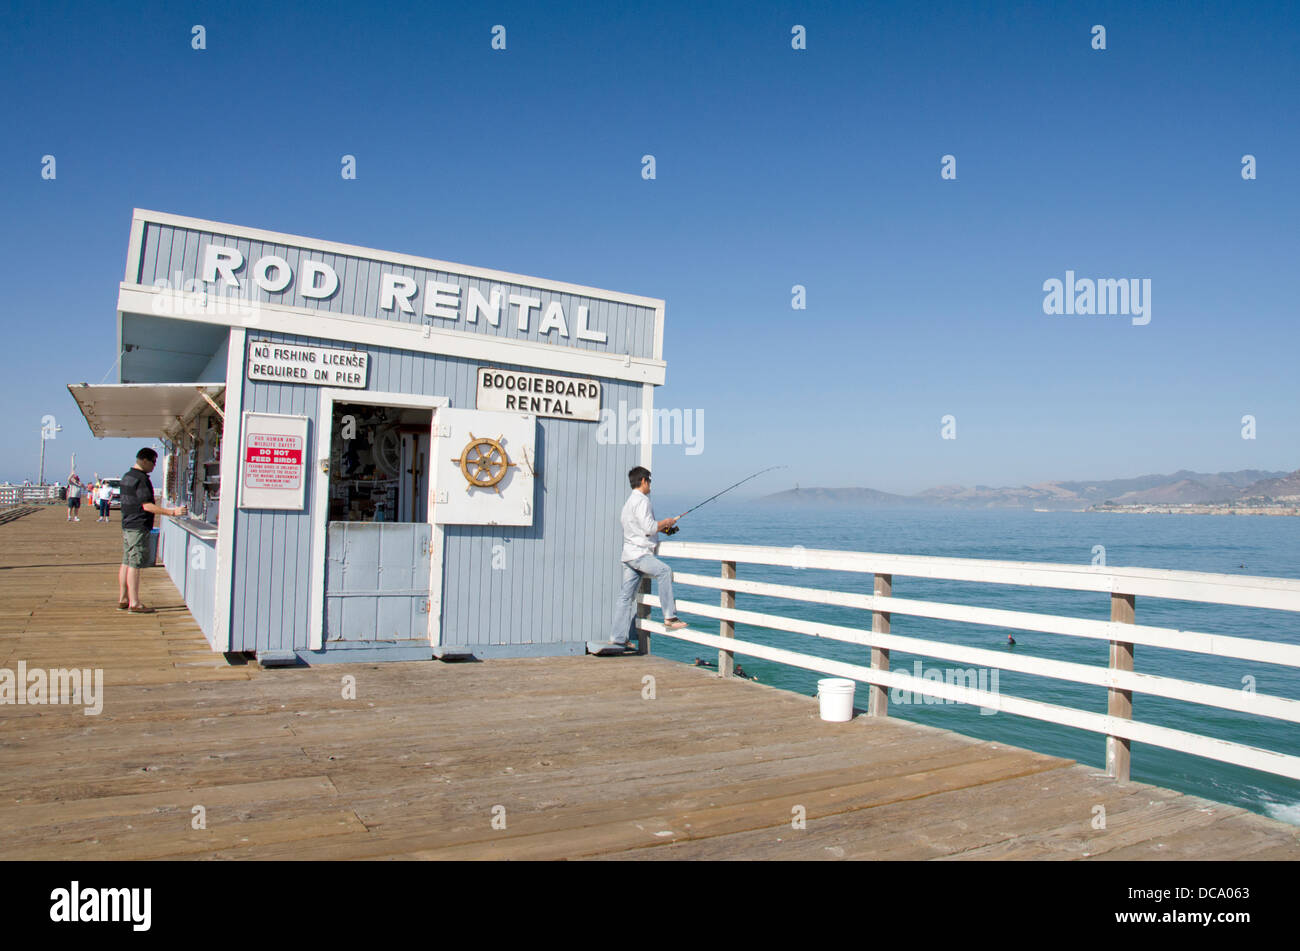 Alquiler de cañas de pescar fotografías e imágenes de alta resolución -  Alamy